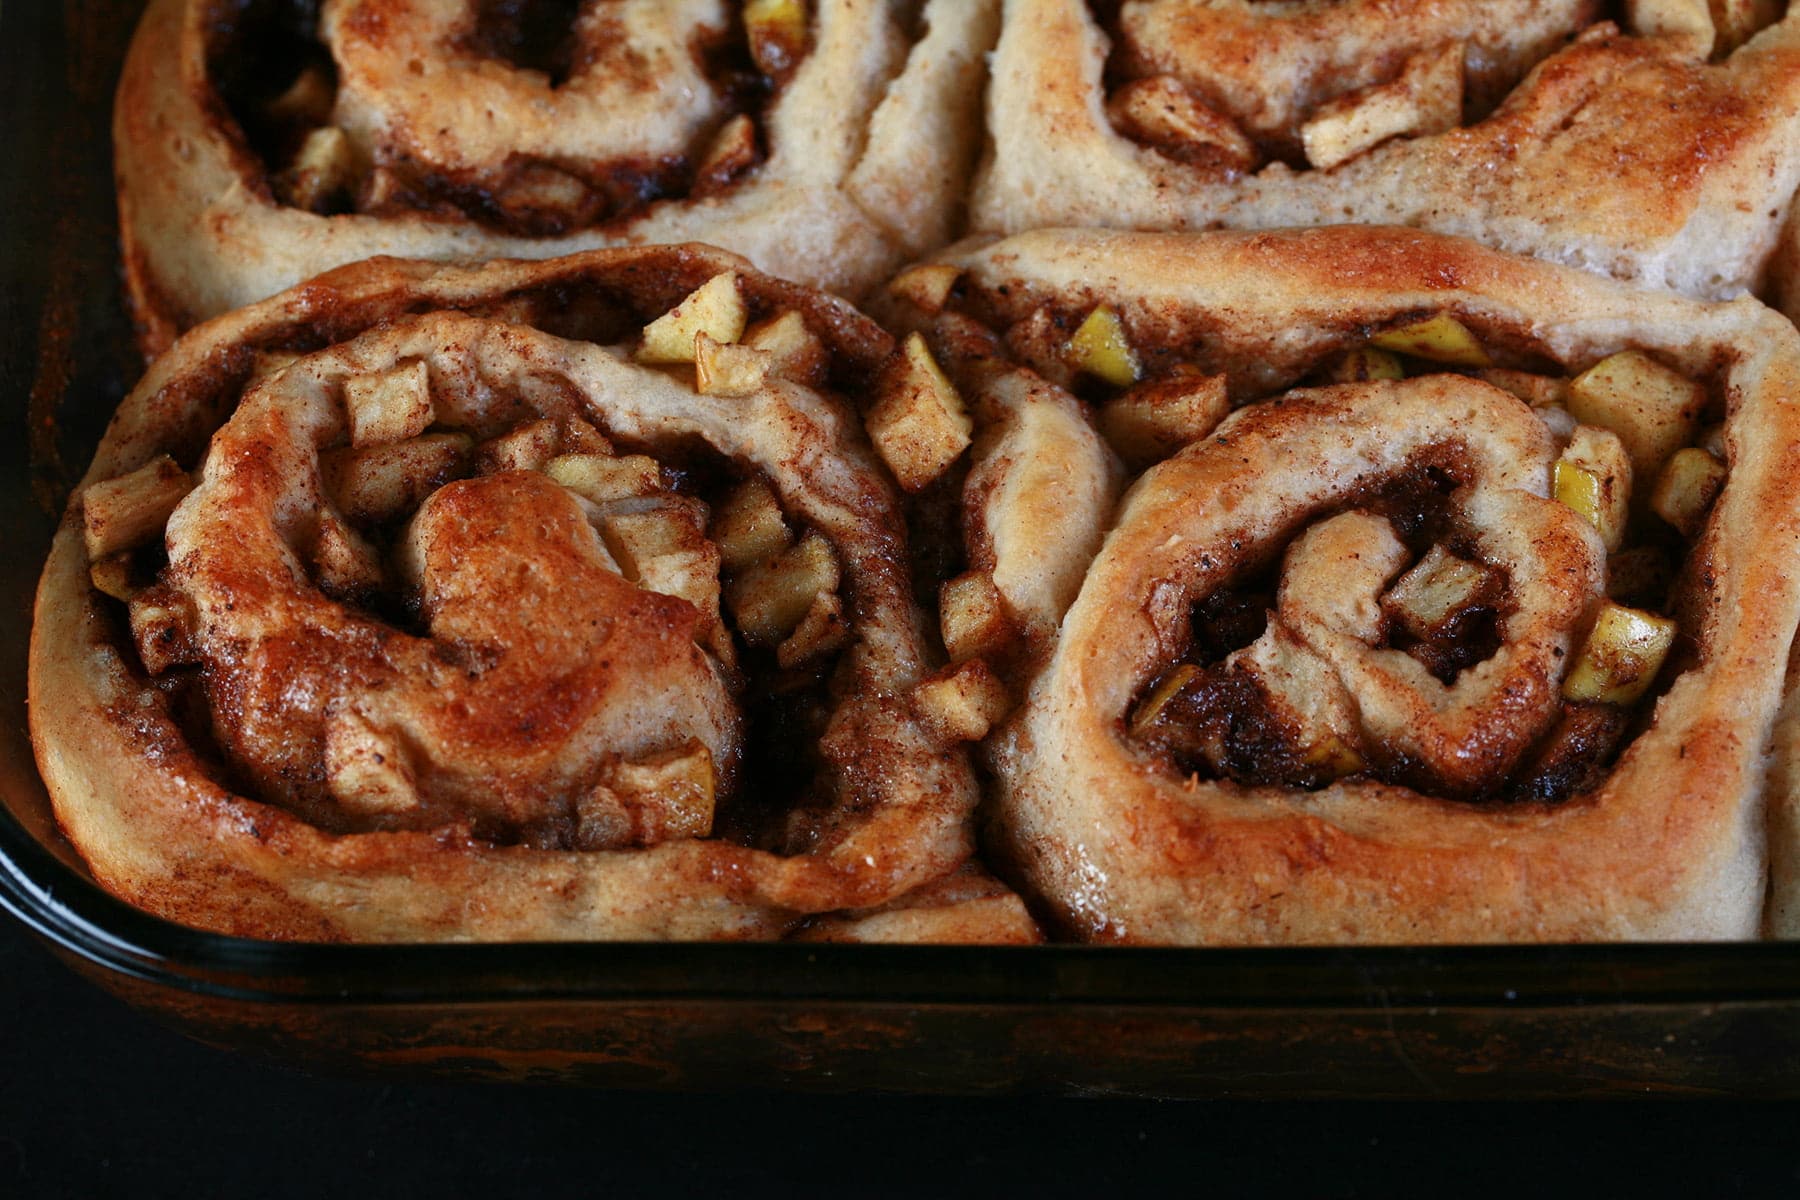 Close up photo of a pan of apple cinnamon buns - cinnamon buns, but with small pieces of apple throughout the cinnamon swirl.